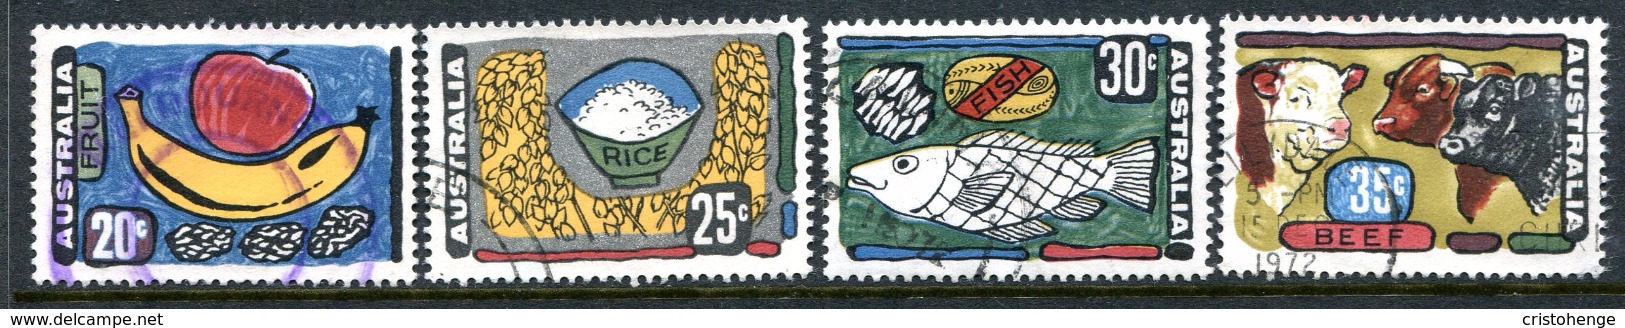 Australia 1972 Primary Industries Set Used - Mint Stamps